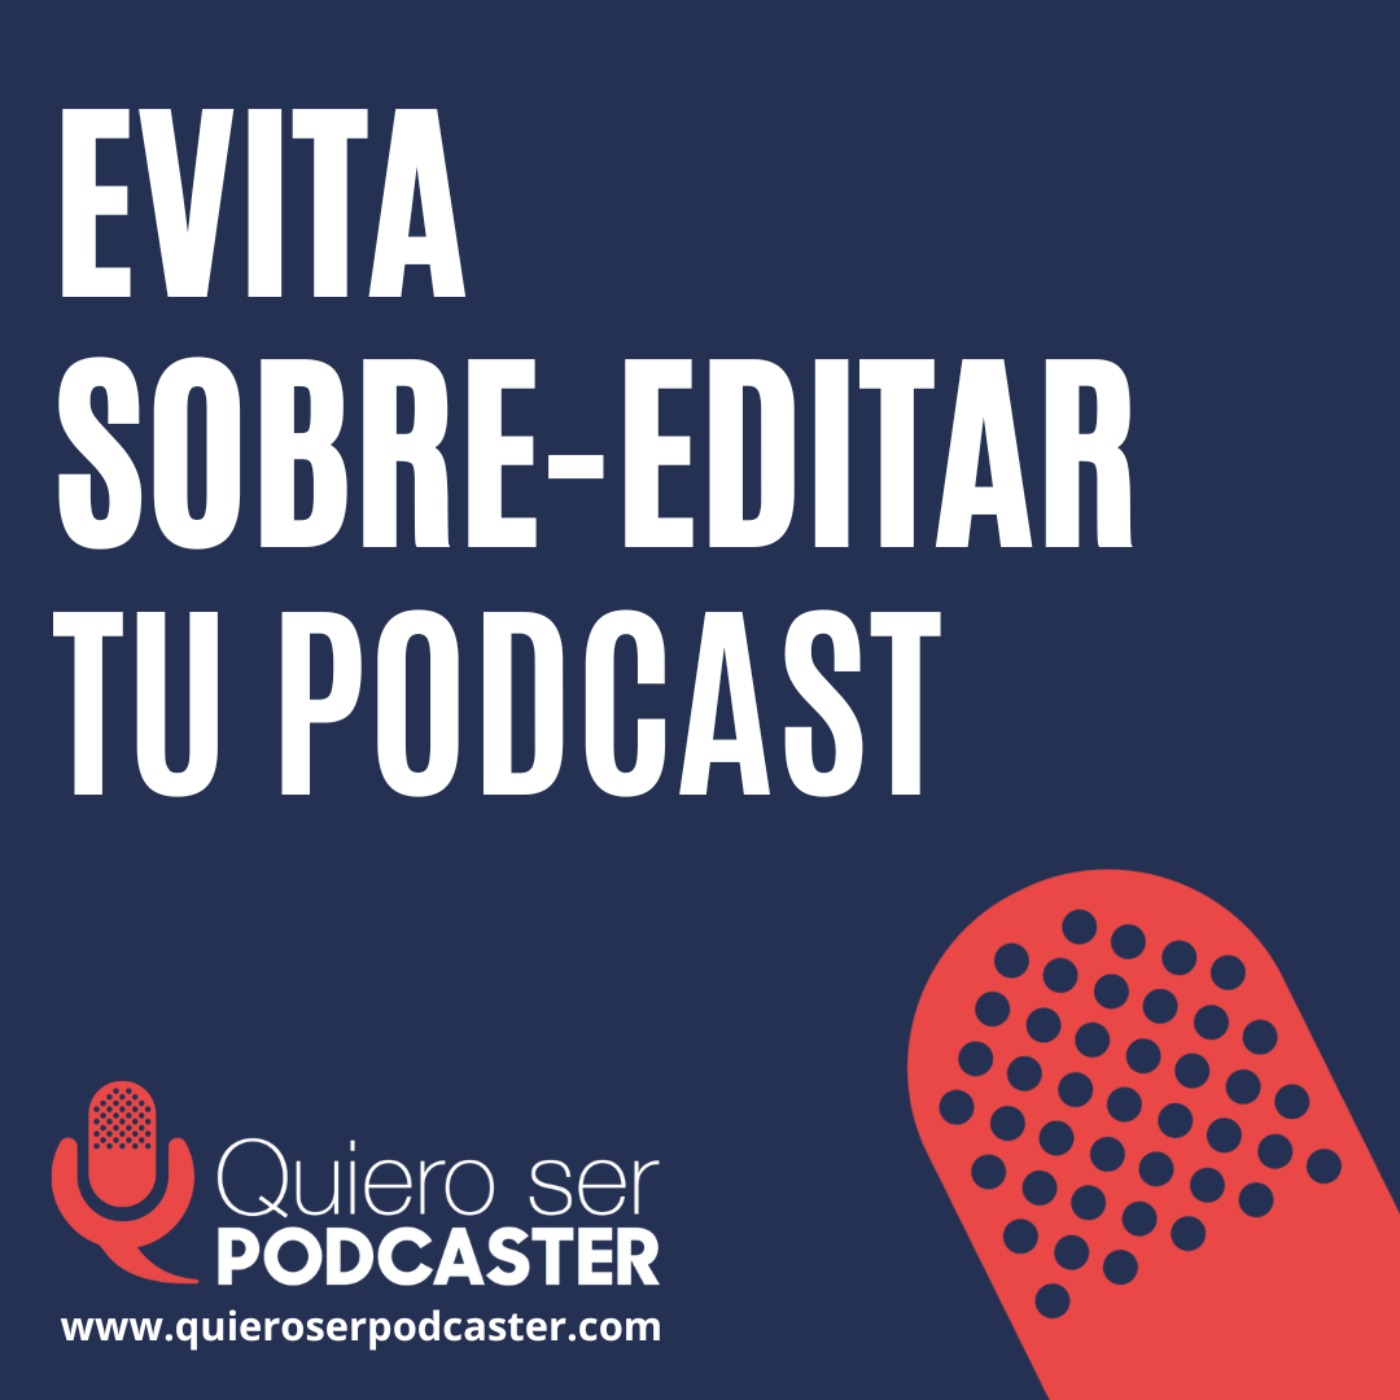 Evita sobre editar tu podcast